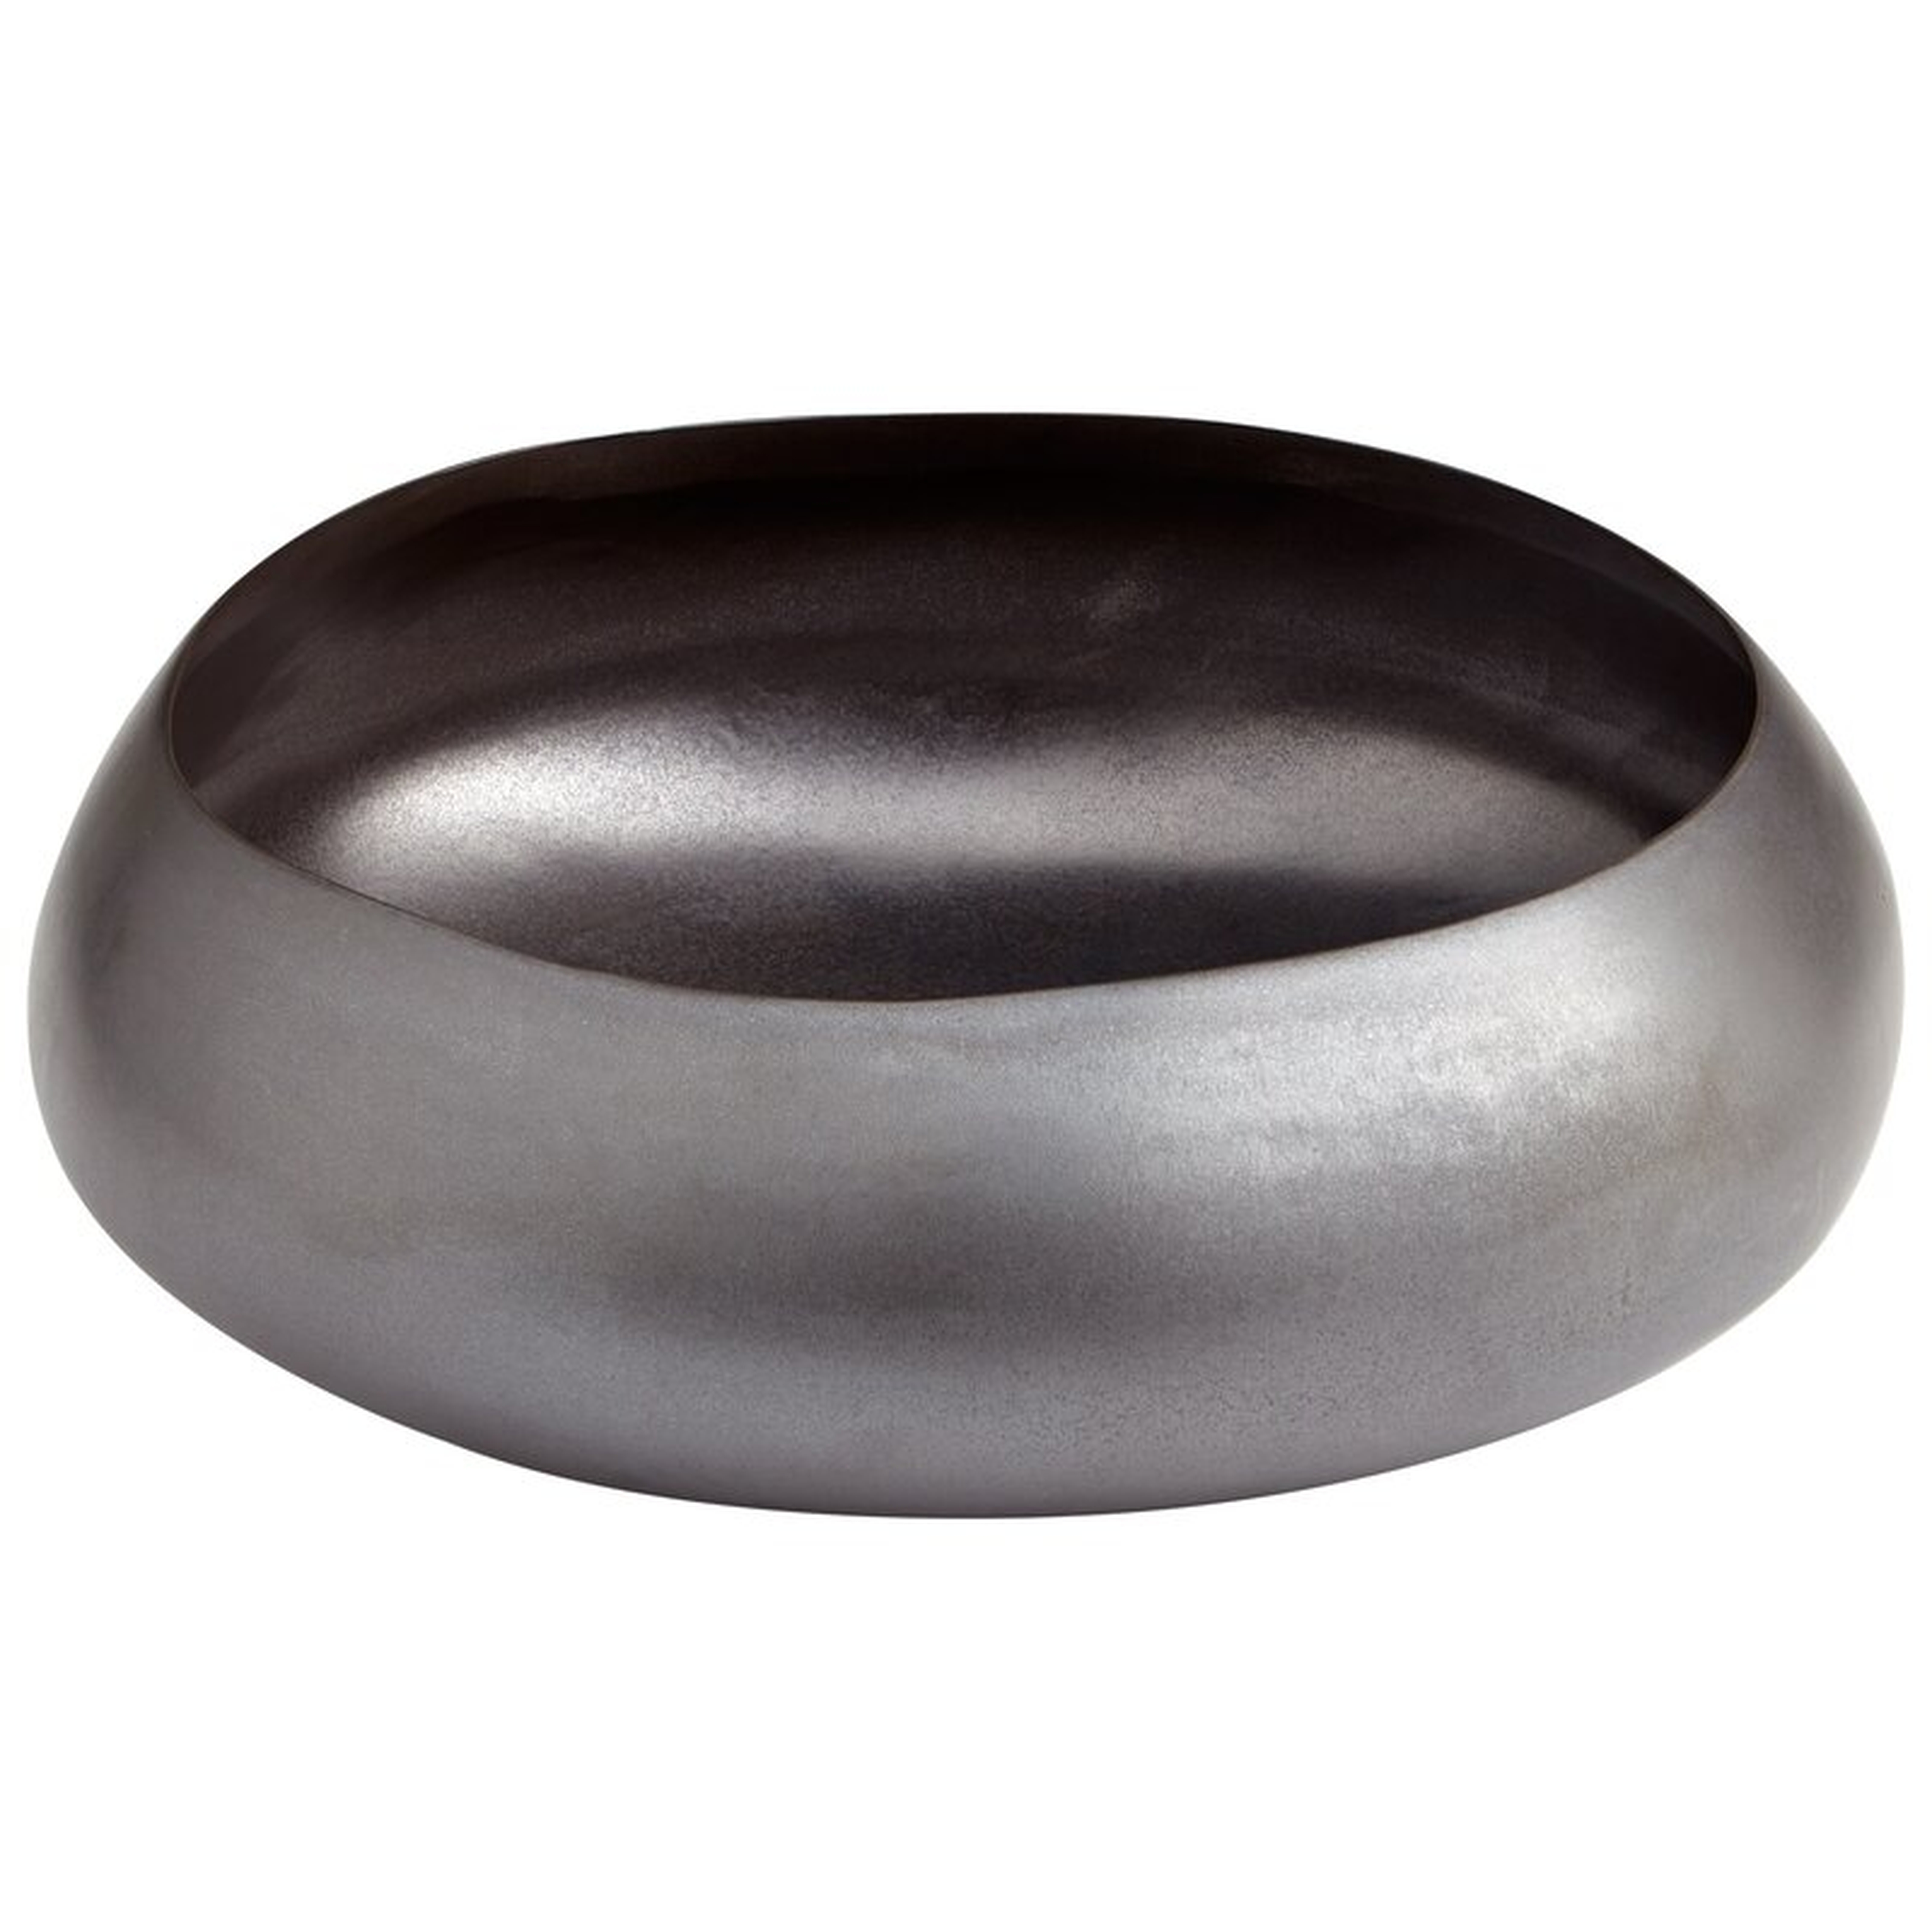 Cyan Design Vesuvius Ceramic Sleek Decorative Bowl in Black - Perigold